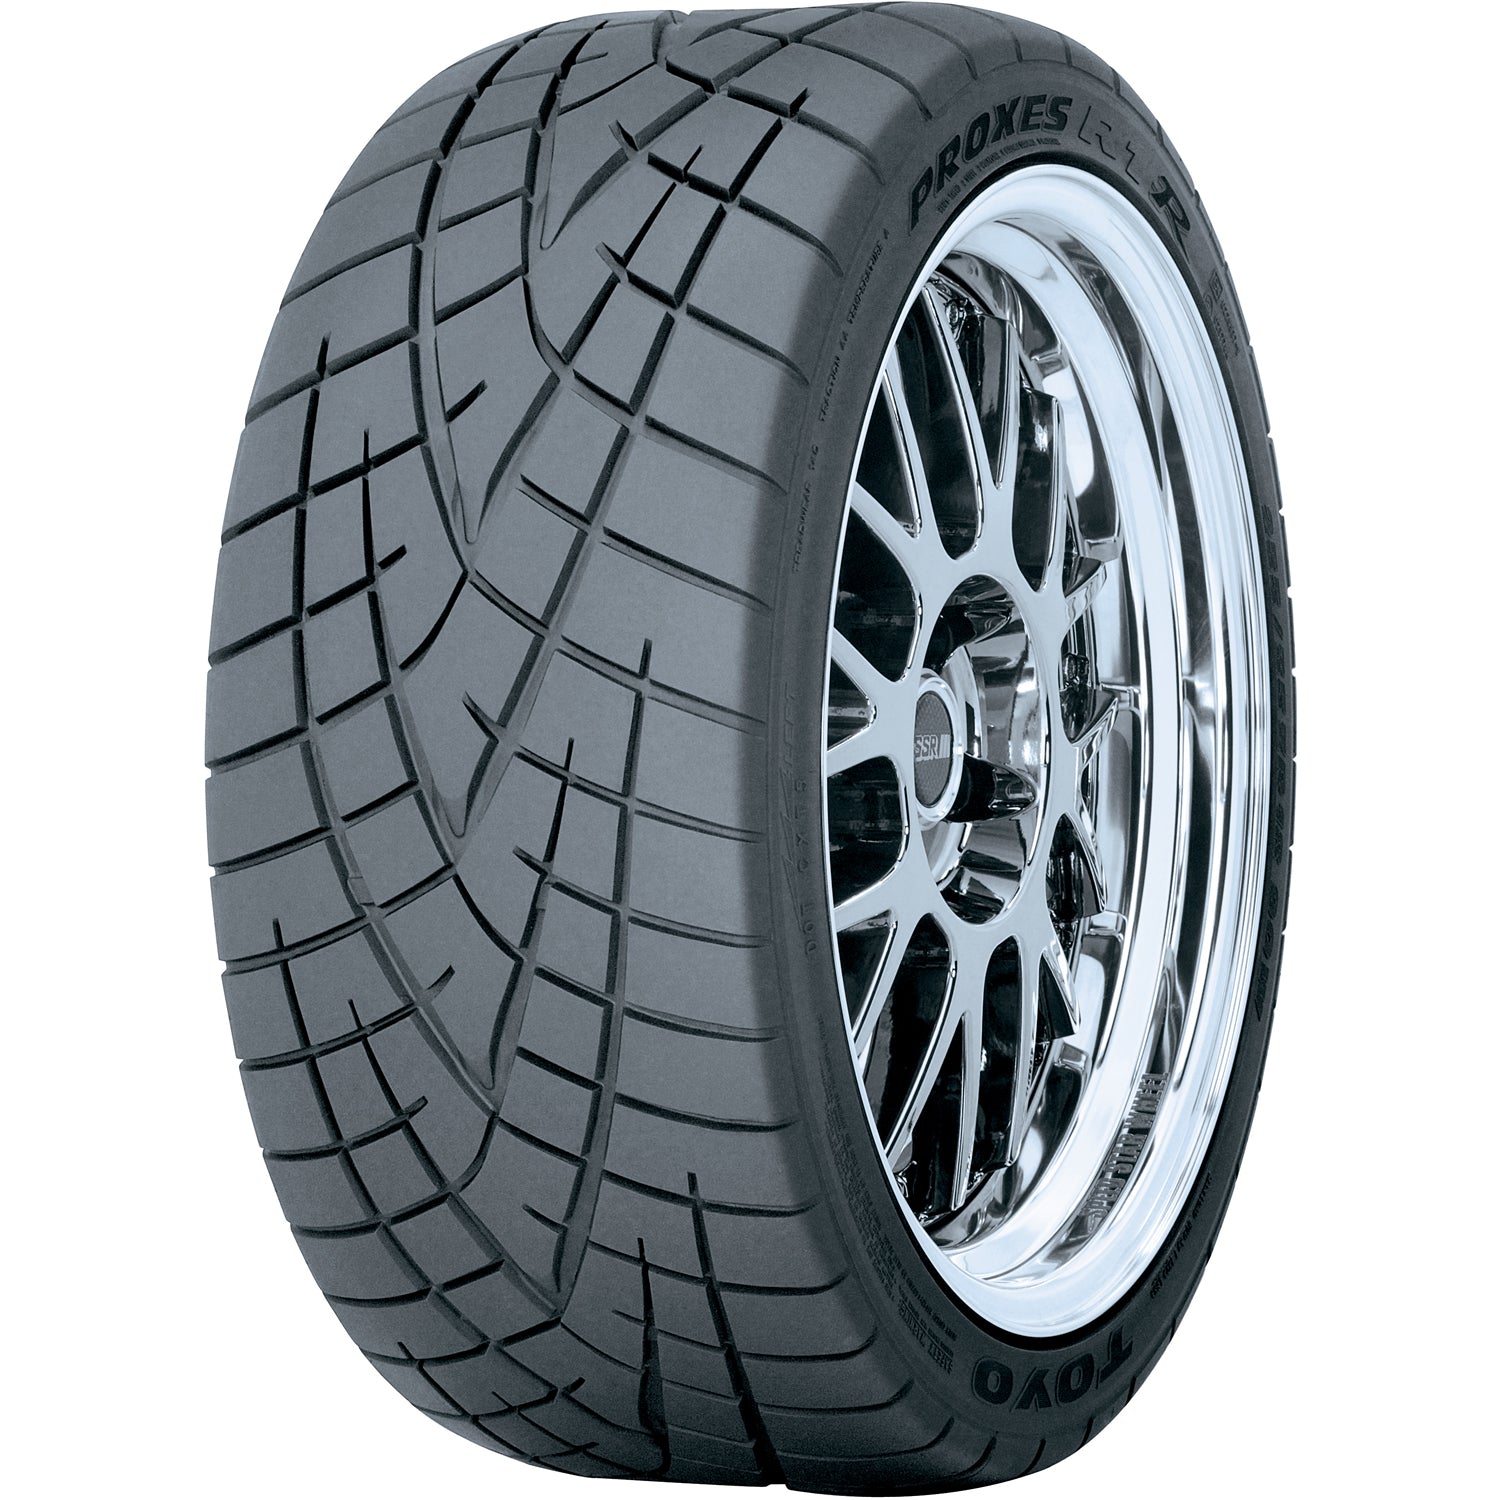 TOYO TIRES PROXES R1R 195/55R15 (23.5X8.1R 15) Tires